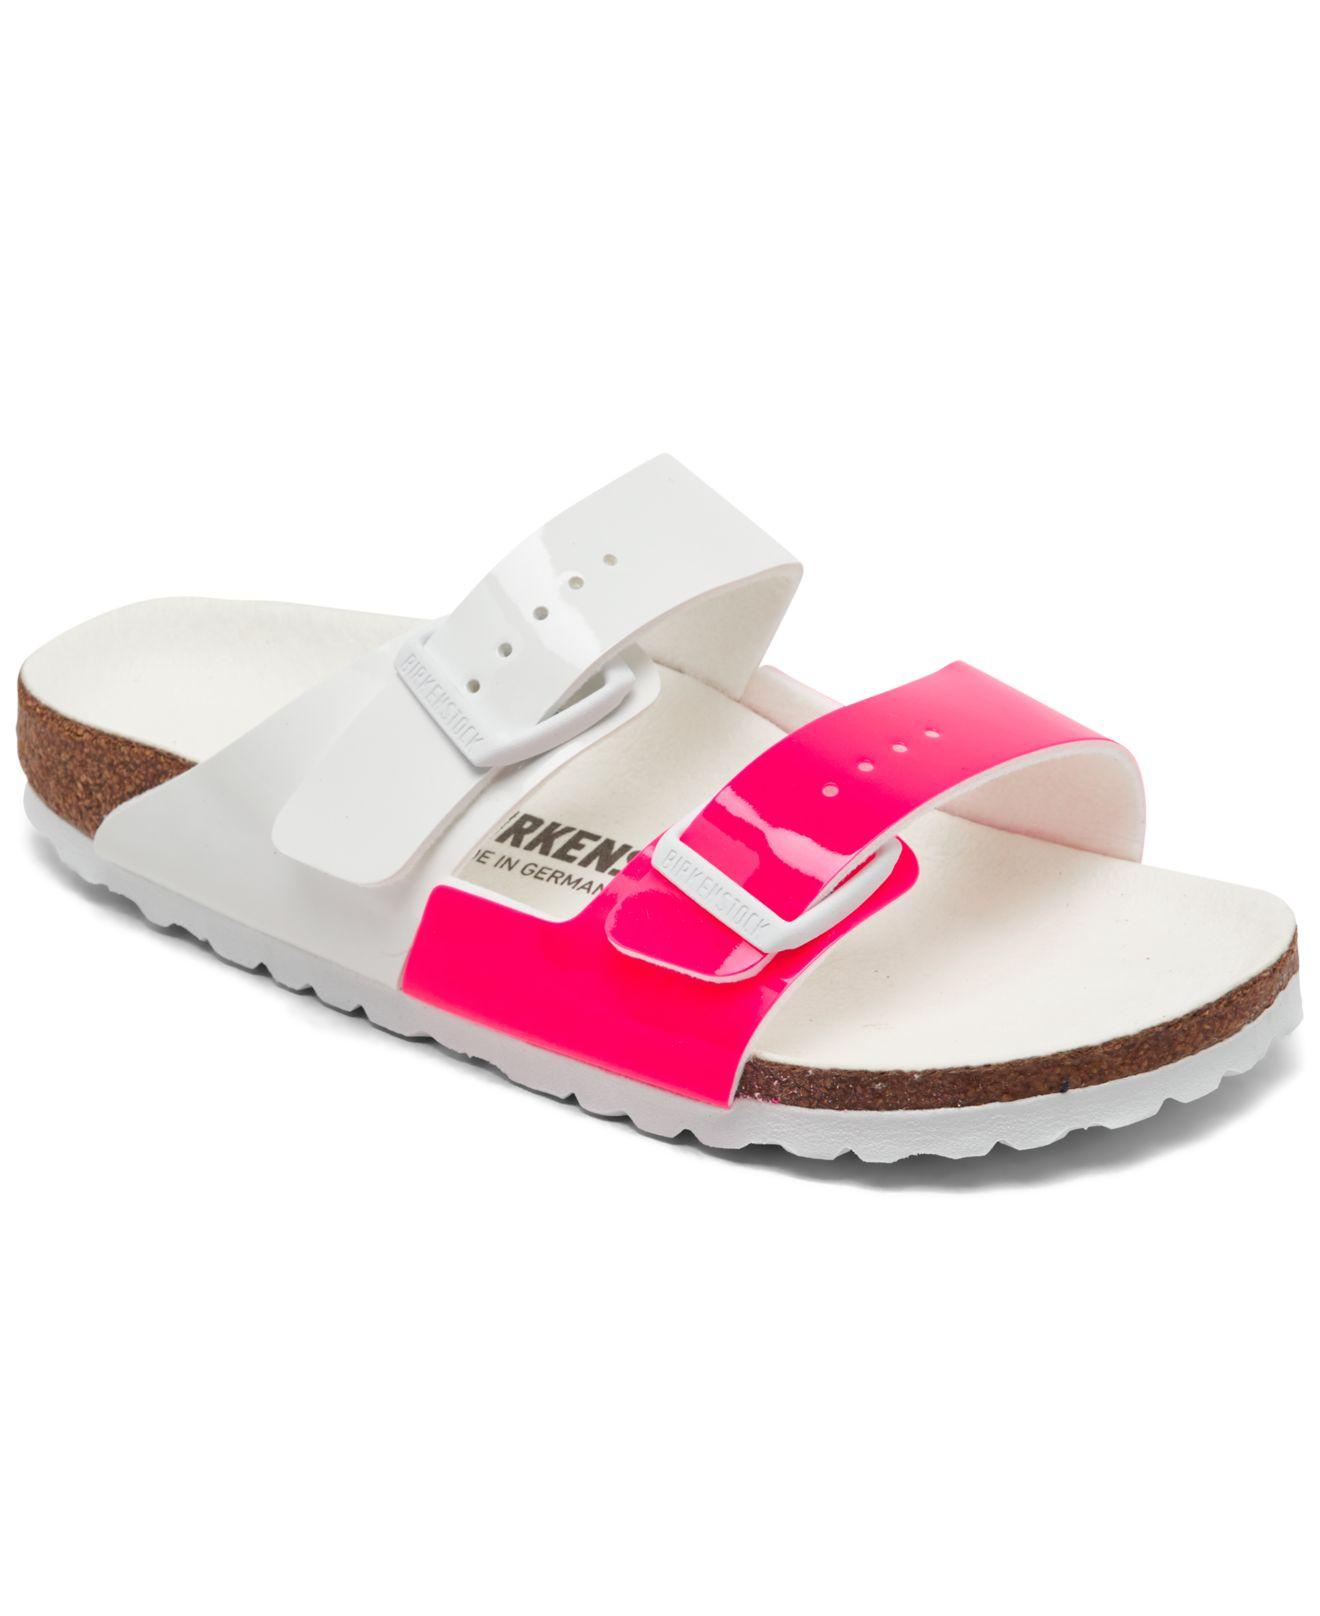 Birkenstock Arizona Split Birko-flor Sandals From Finish Line in Pink | Lyst